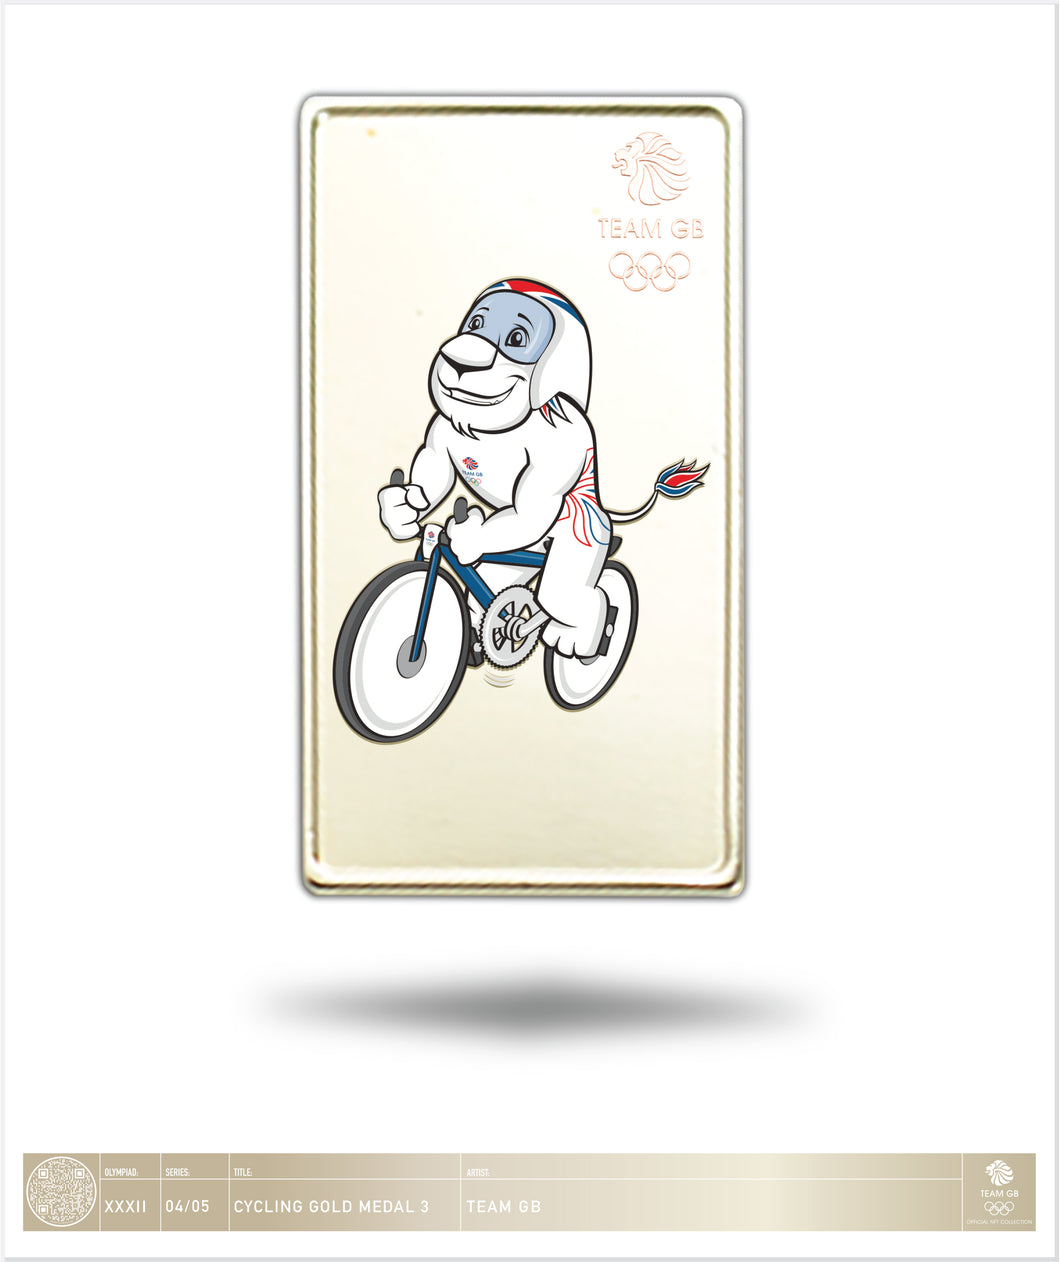 Golden Medal Moment - Charlotte Worthington - Tokyo - BMX FREESTYLE - 01 August 2021 - 4/5